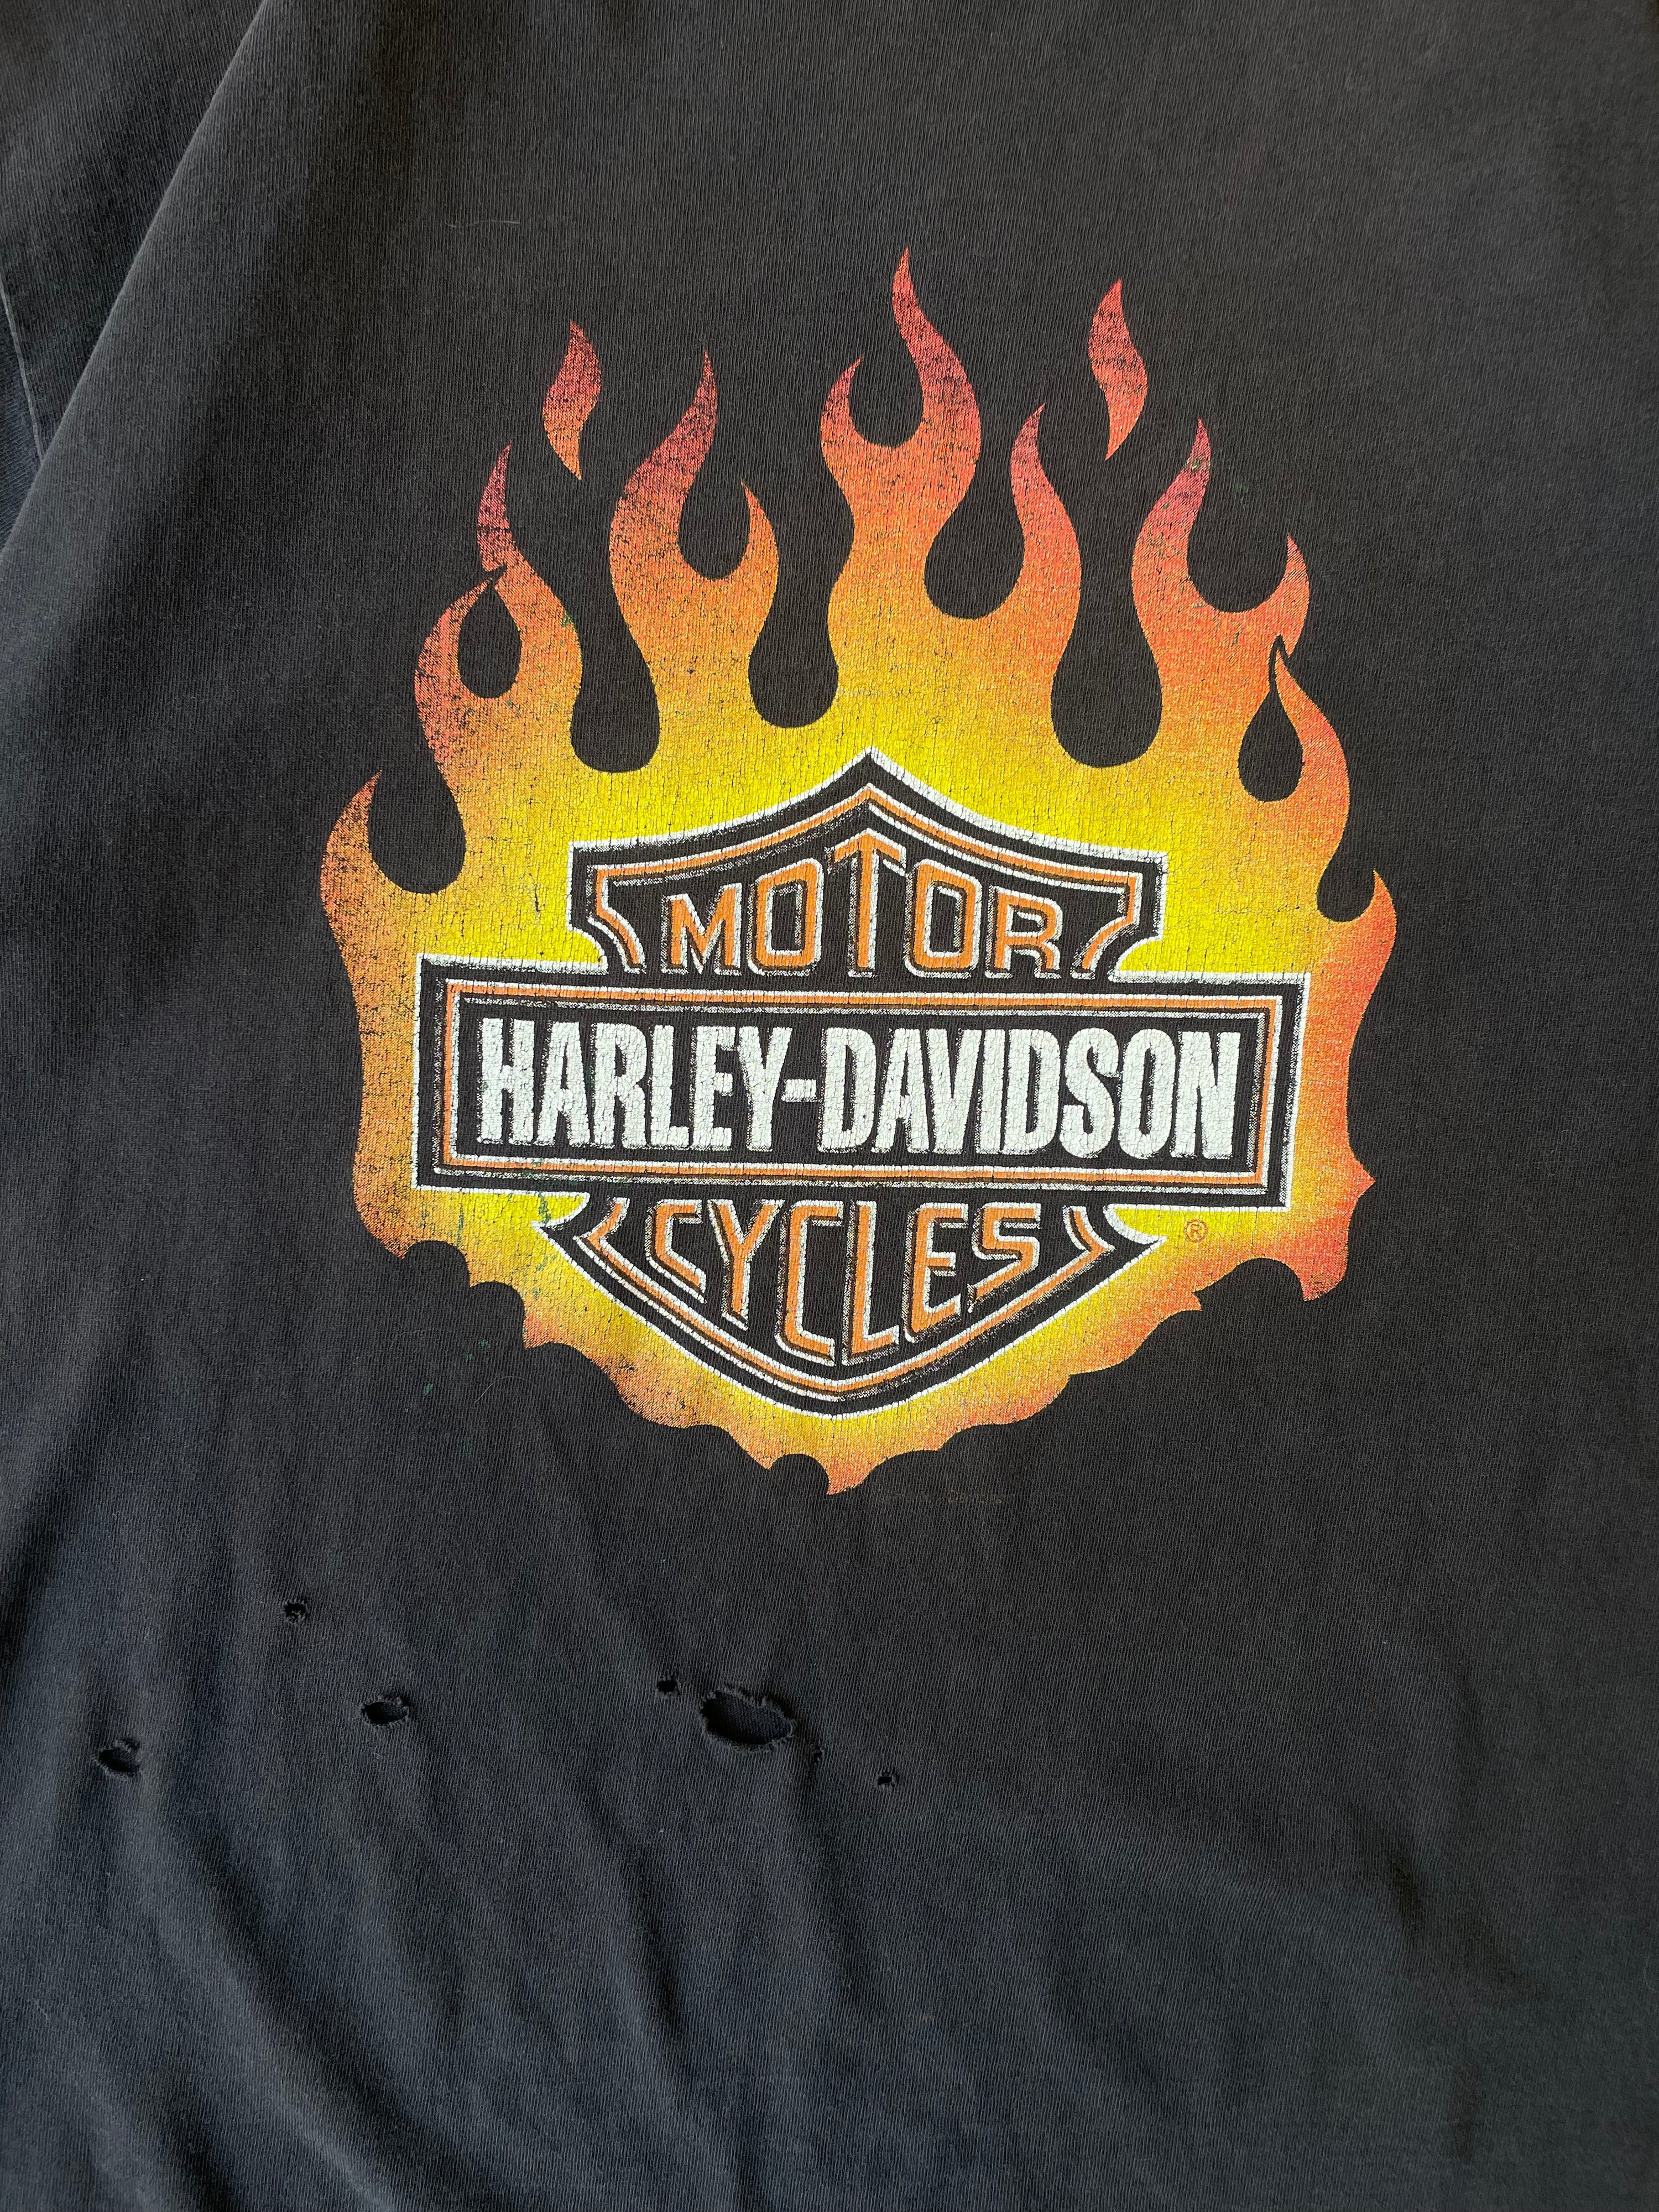 90s Harley Davidson Distressed Flame T-Shirt - Large